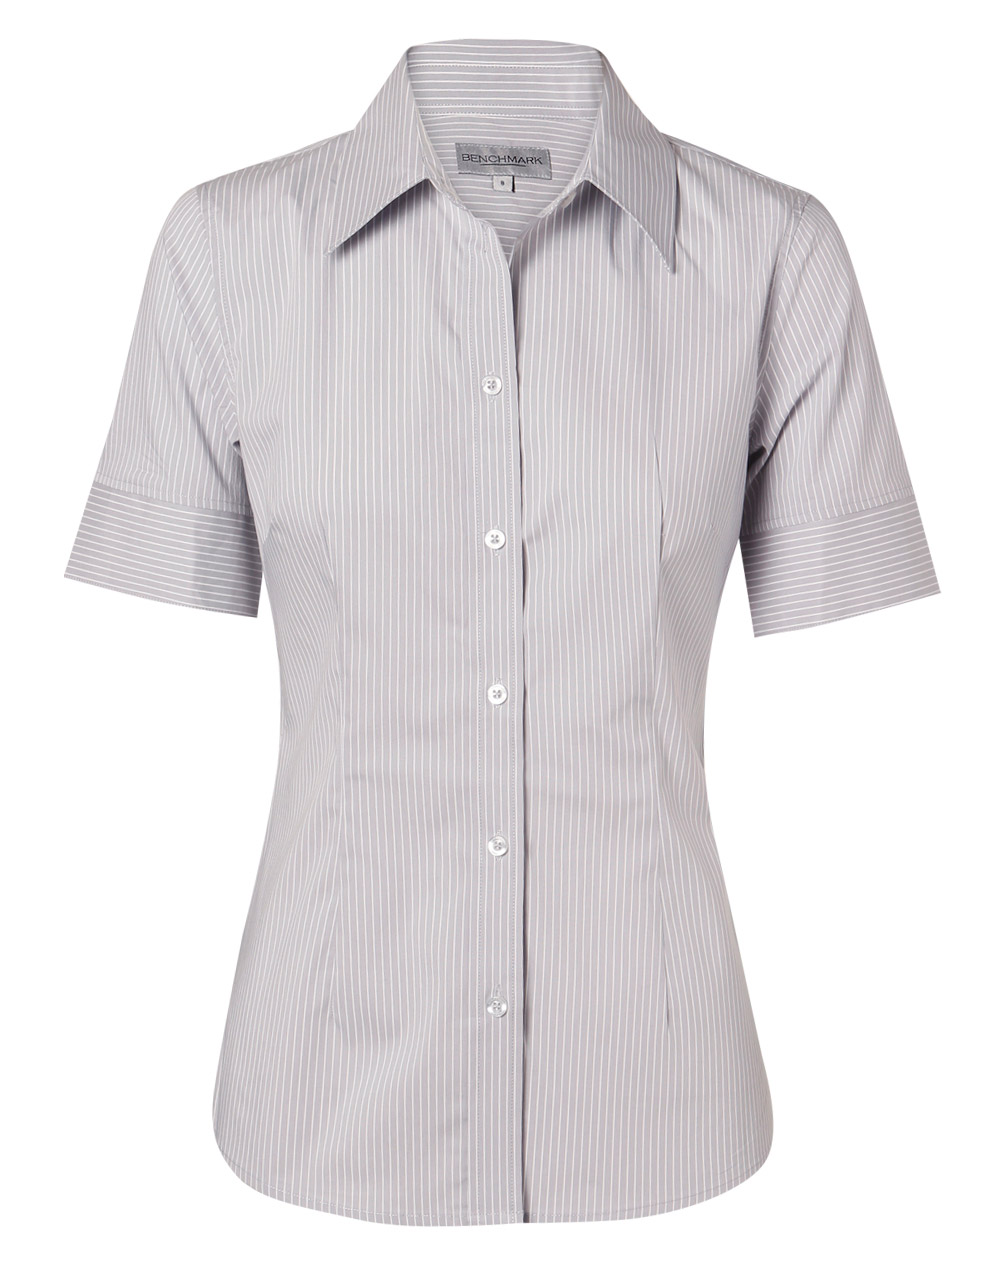 M8200S/M8200/M8200L Women’s Ticking Stripe Short Sleeve Shirt